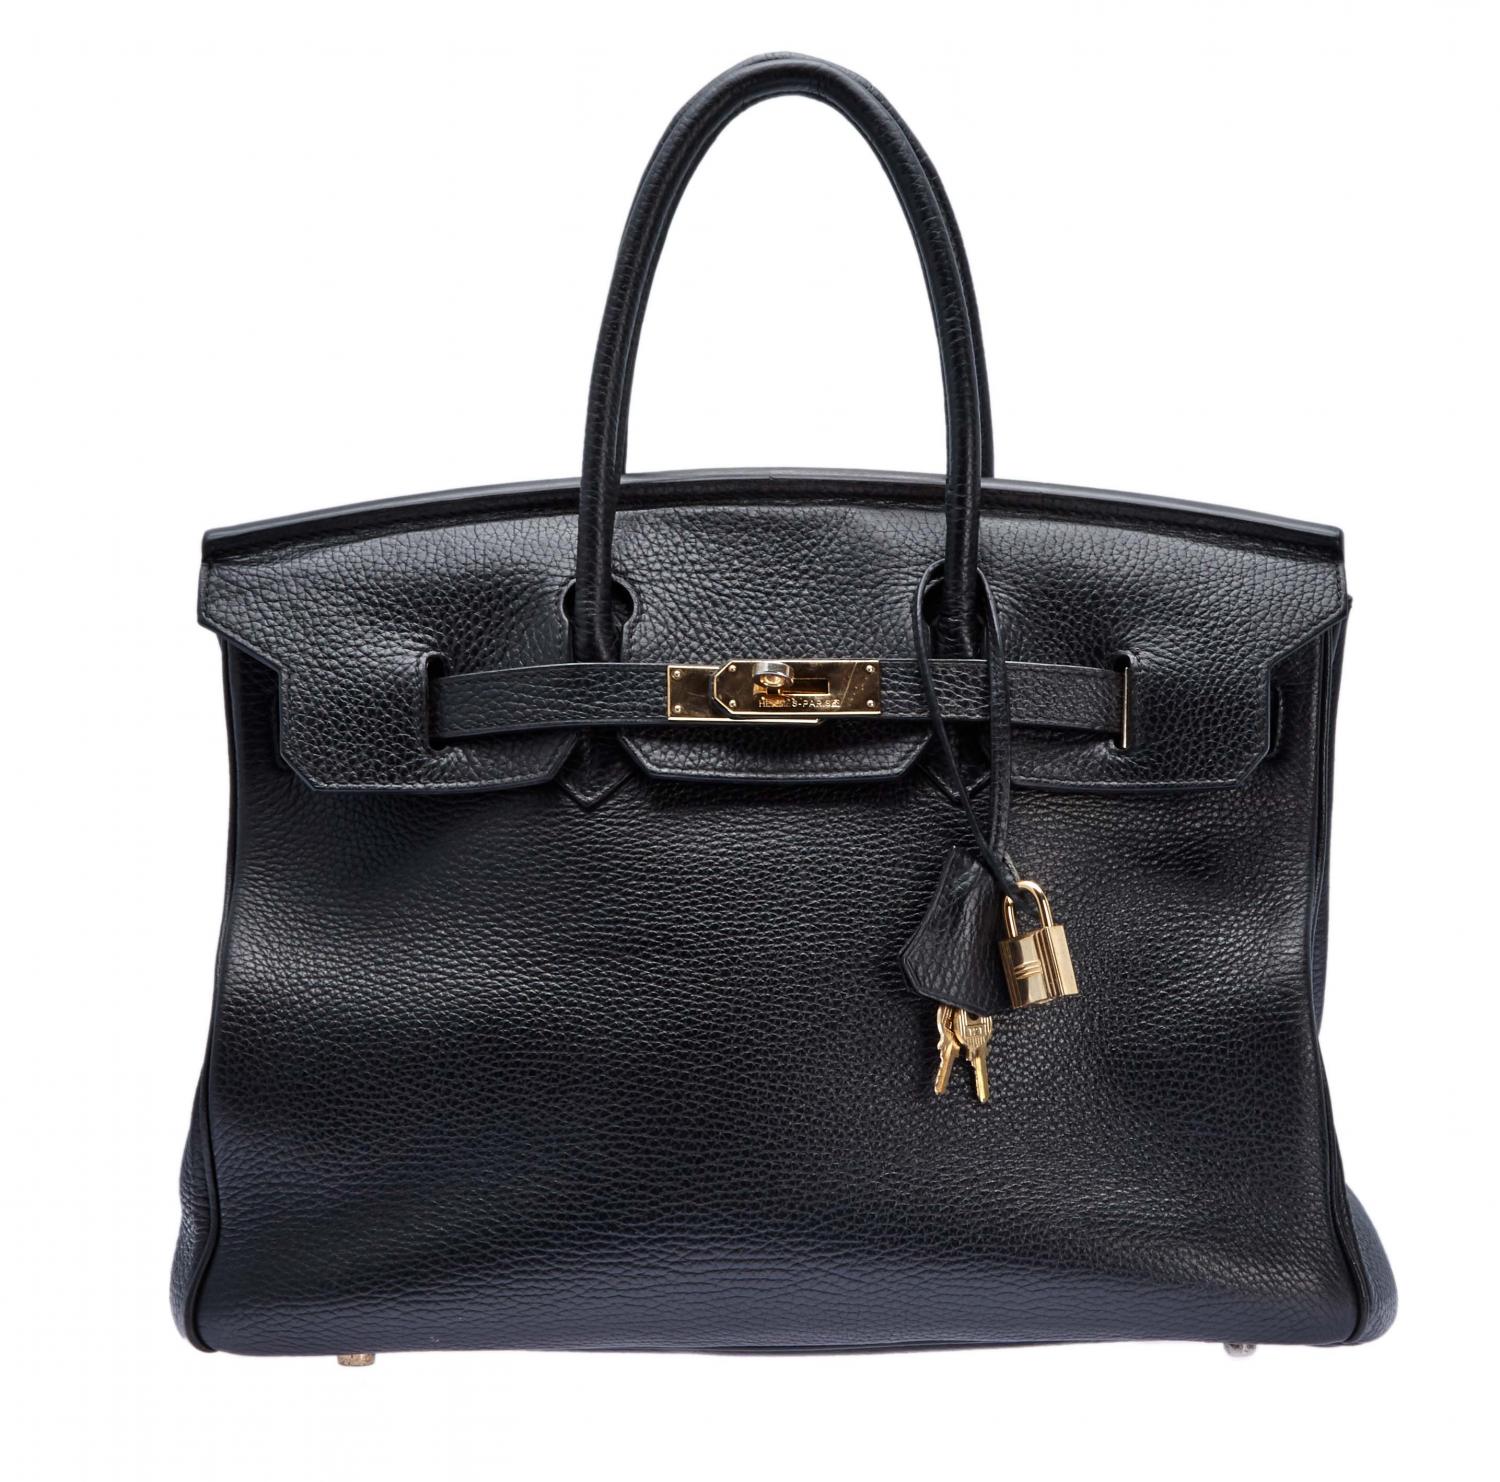 Hermes Handbag Bag | IQS Executive